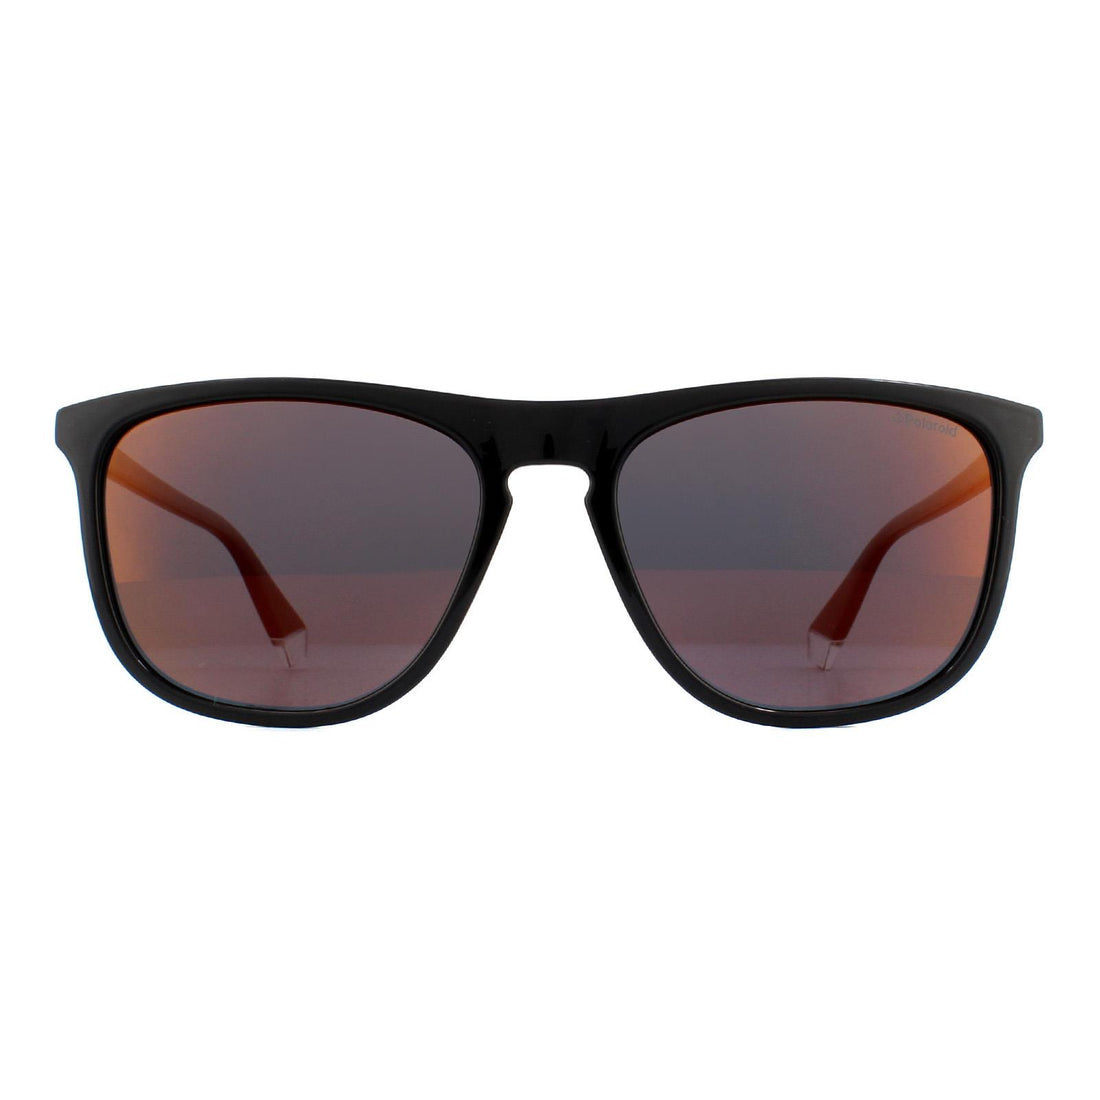 Polaroid PLD 2092/S Sunglasses Black / Red Mirror Polarized